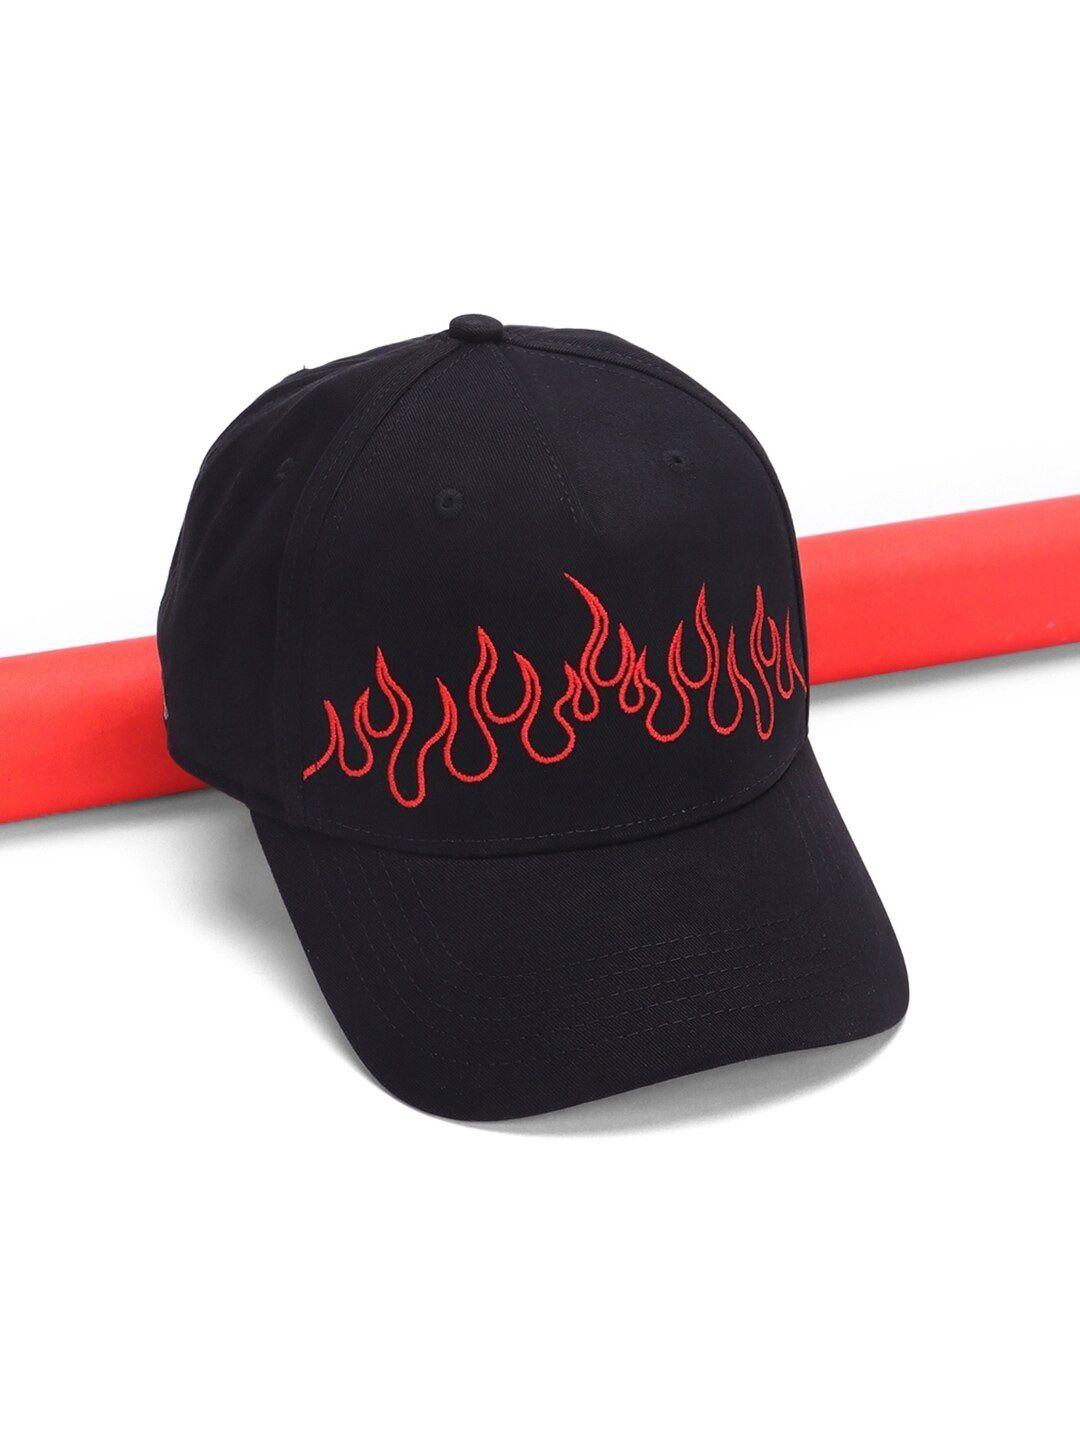 bewakoof unisex fire printed cotton baseball cap